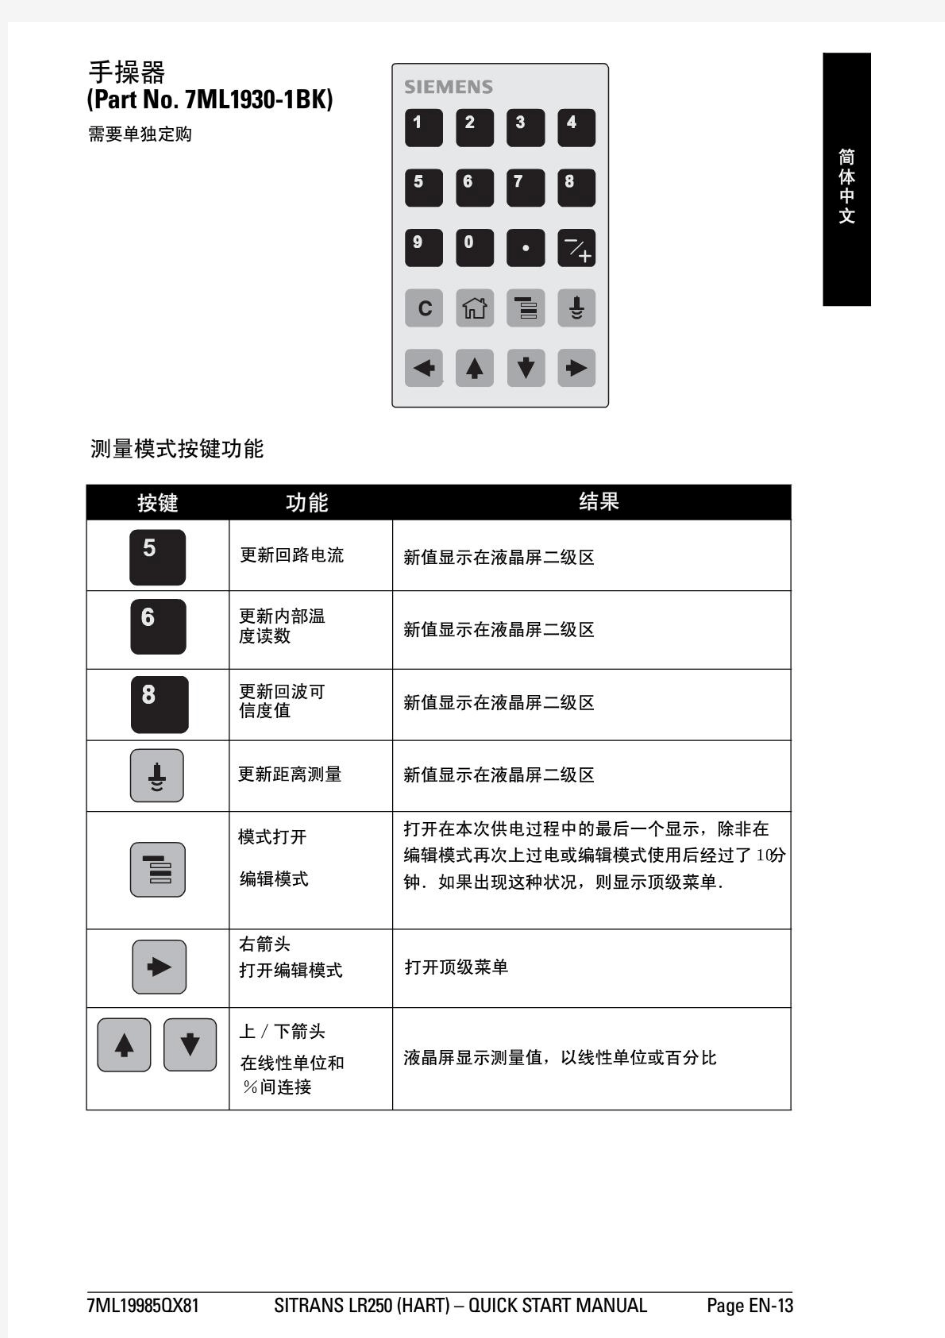 7ML1930-1BK手操器中文说明书